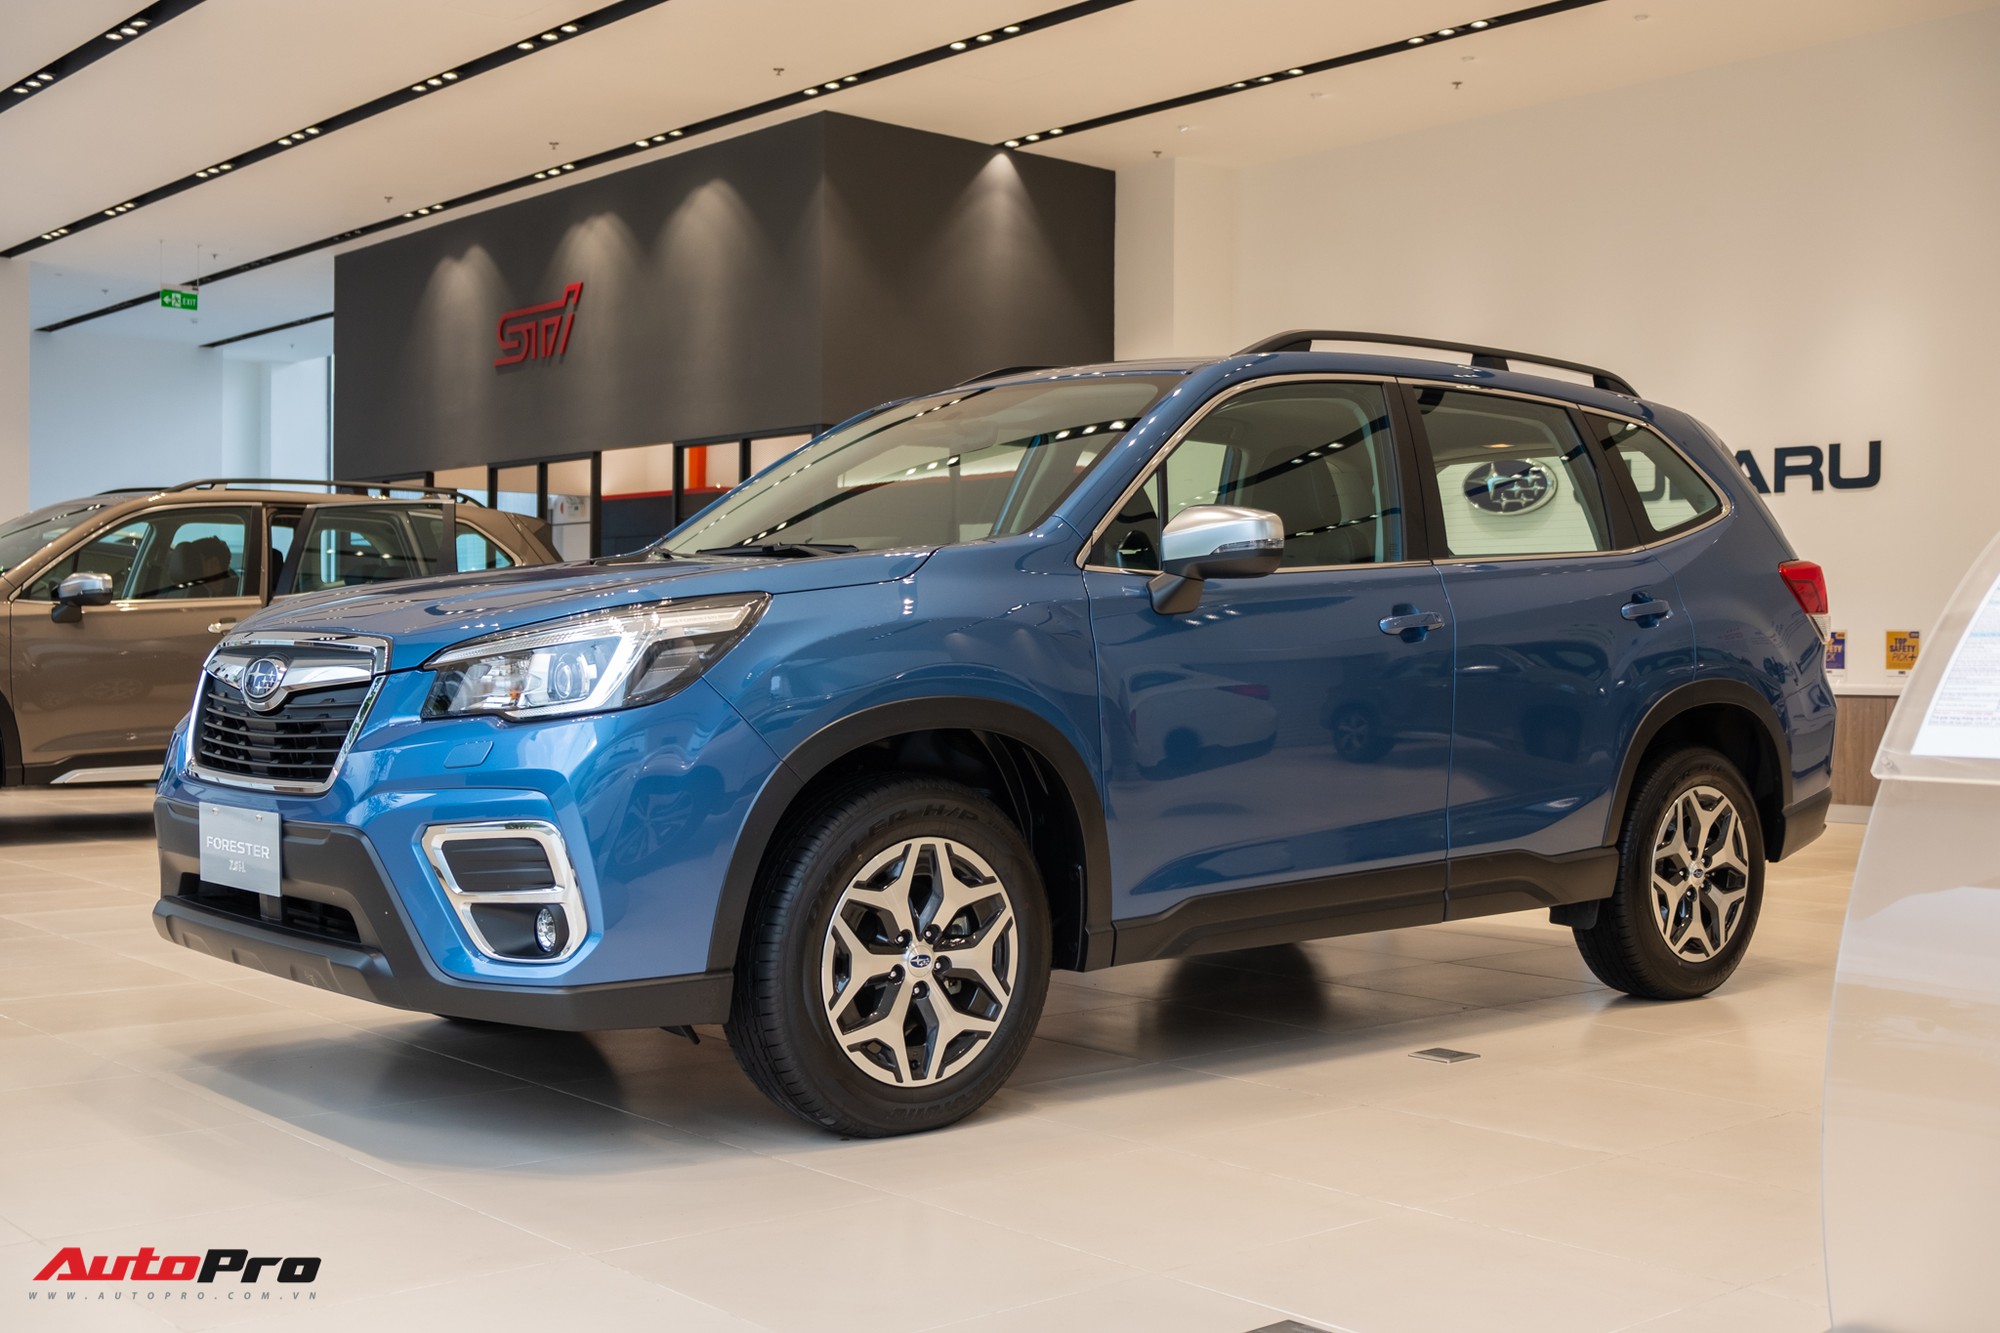 Khám phá Subaru Forester 2019 bản tiêu chuẩn giá ưu đãi